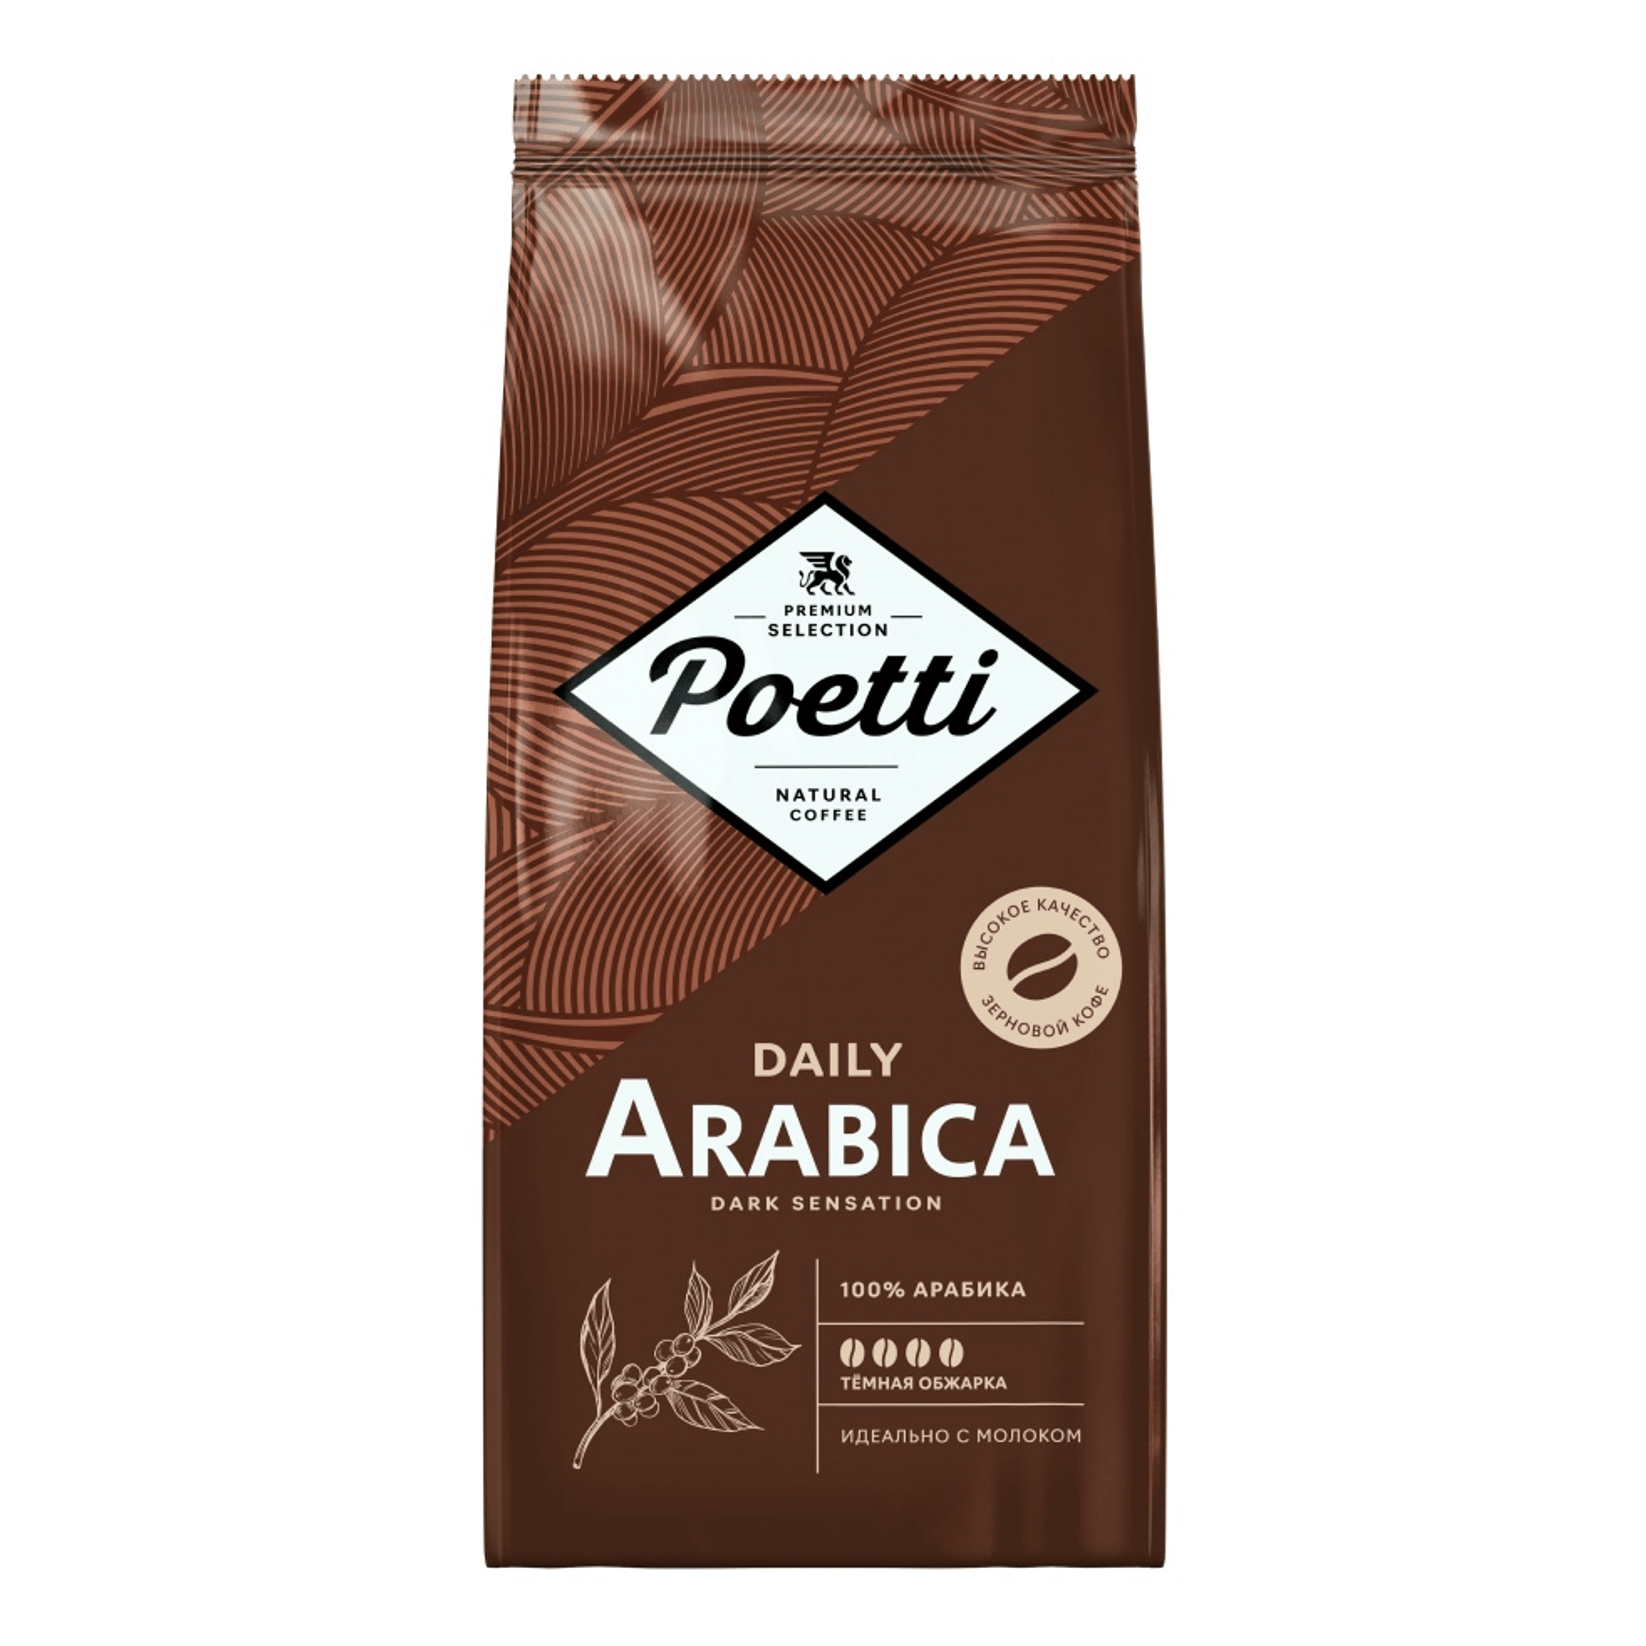 Кофе в зернах Poetti Daily Arabica Dark Sensation 750 г кофе poetti daily arabica в зернах